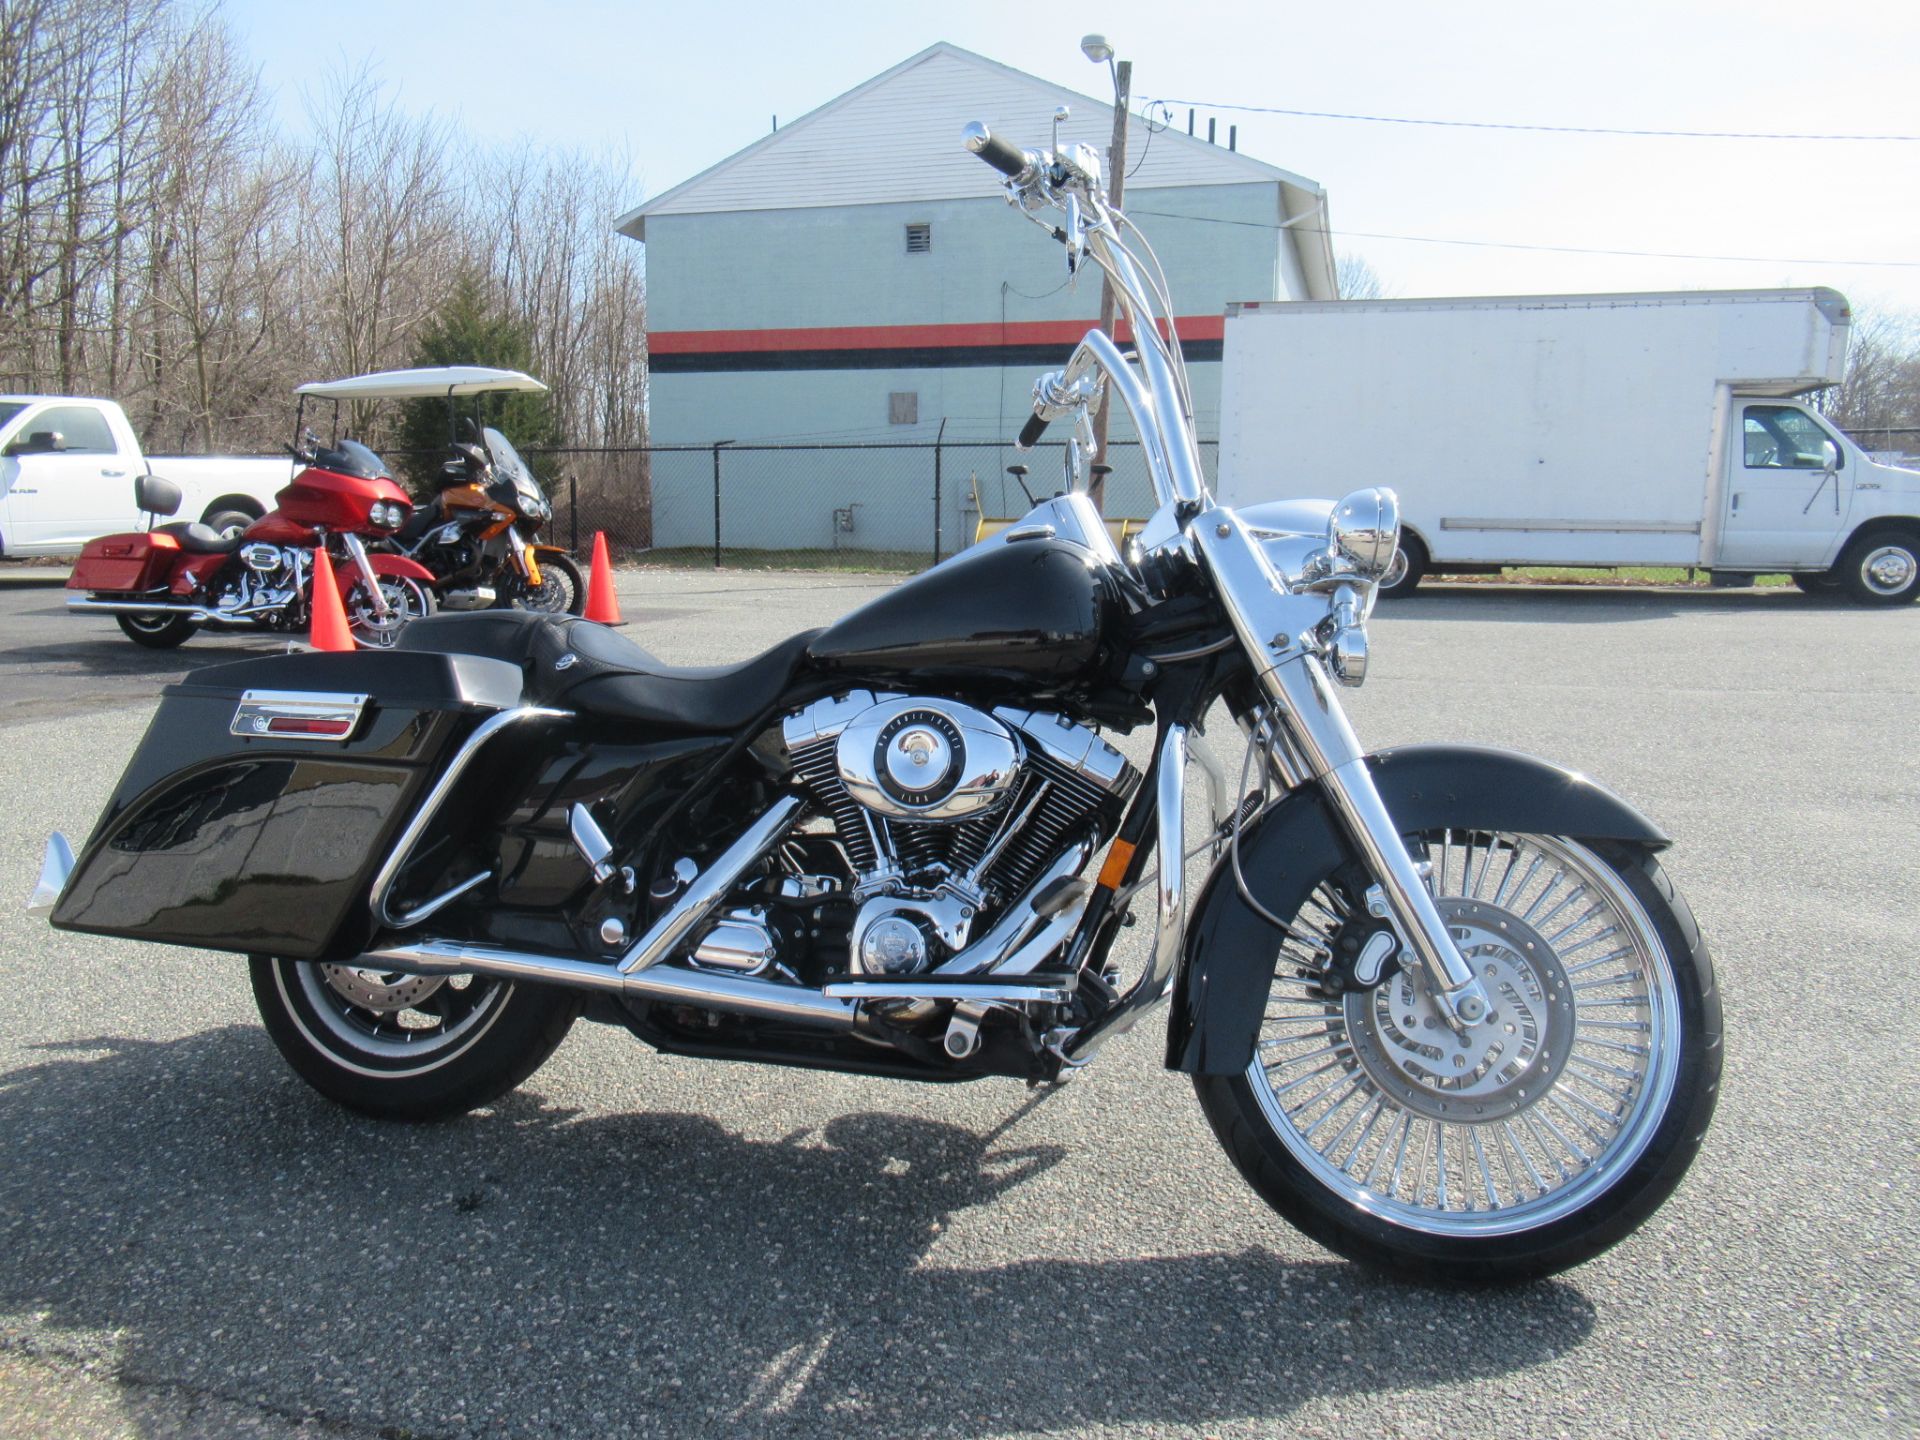 2003 Harley-Davidson FLHR/FLHRI Road King® in Springfield, Massachusetts - Photo 3